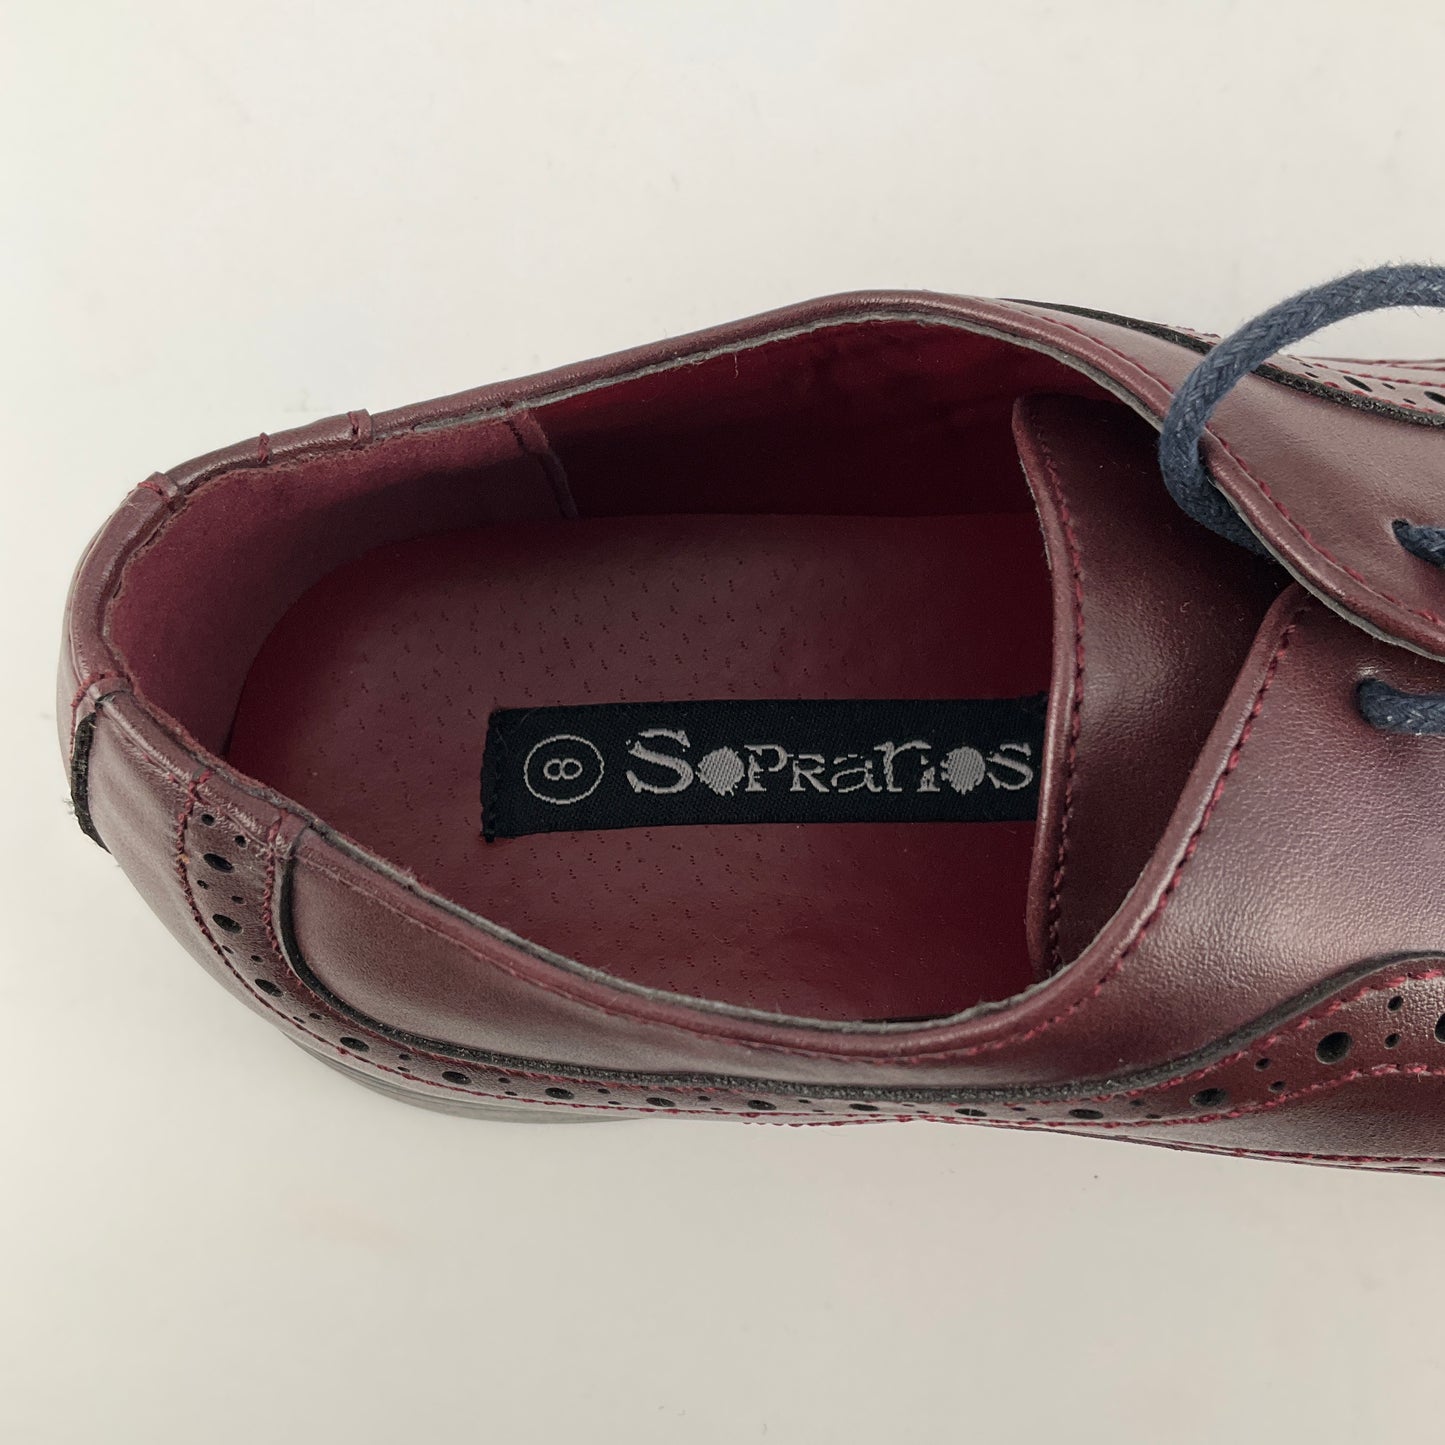 Sopranos - Dress Shoes - Size 8